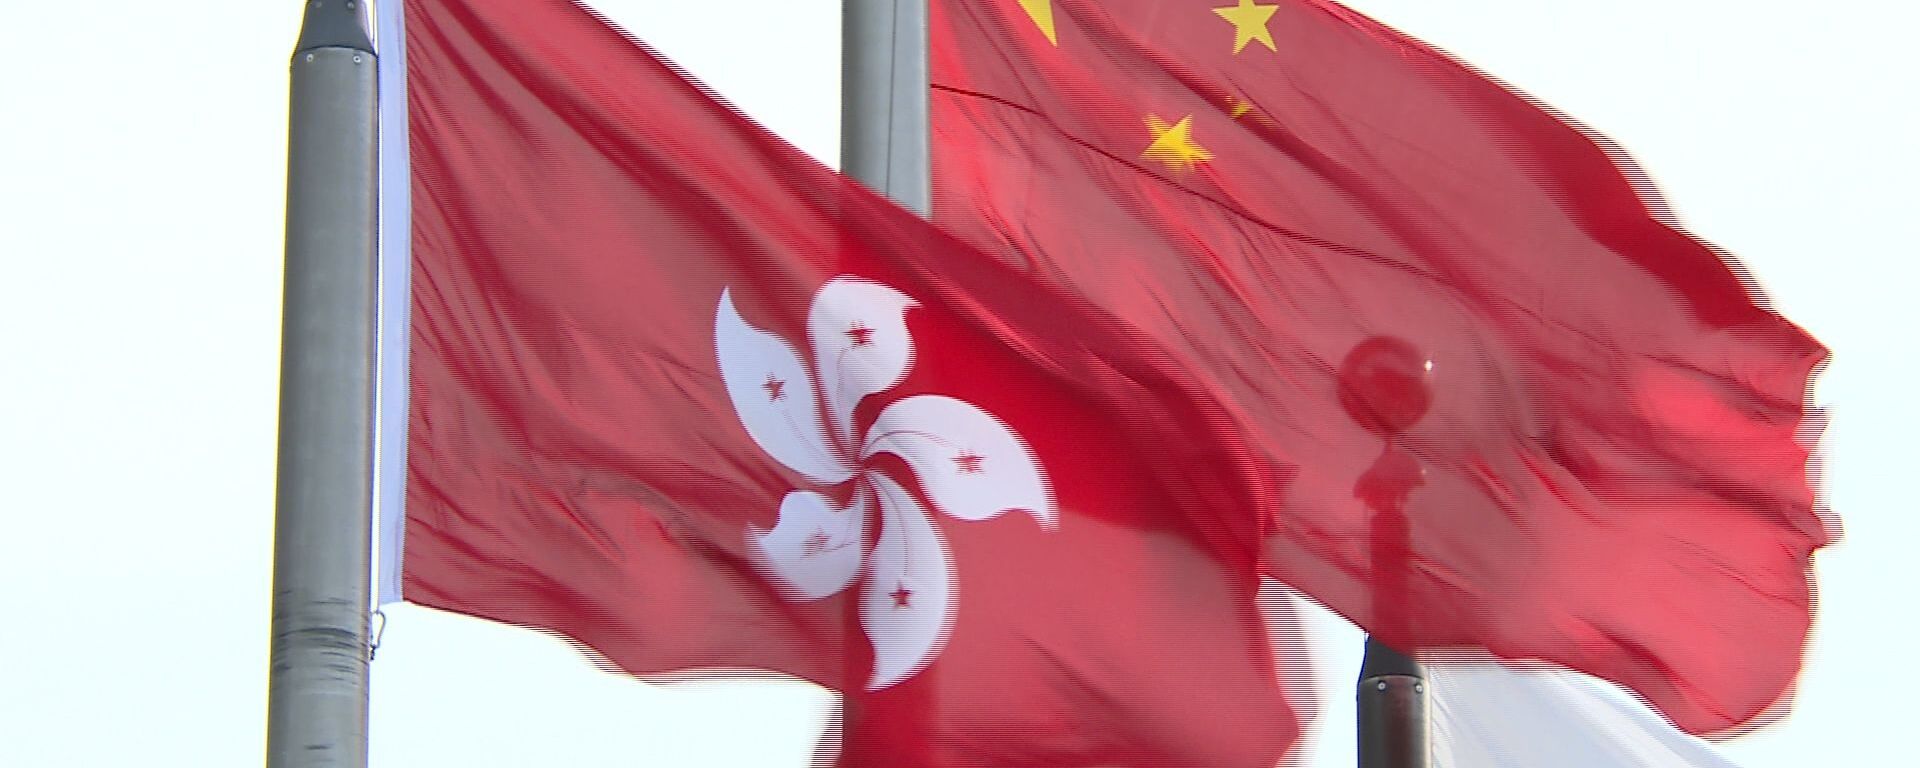 Banderas de Hong Kong y China - Sputnik Mundo, 1920, 05.03.2021